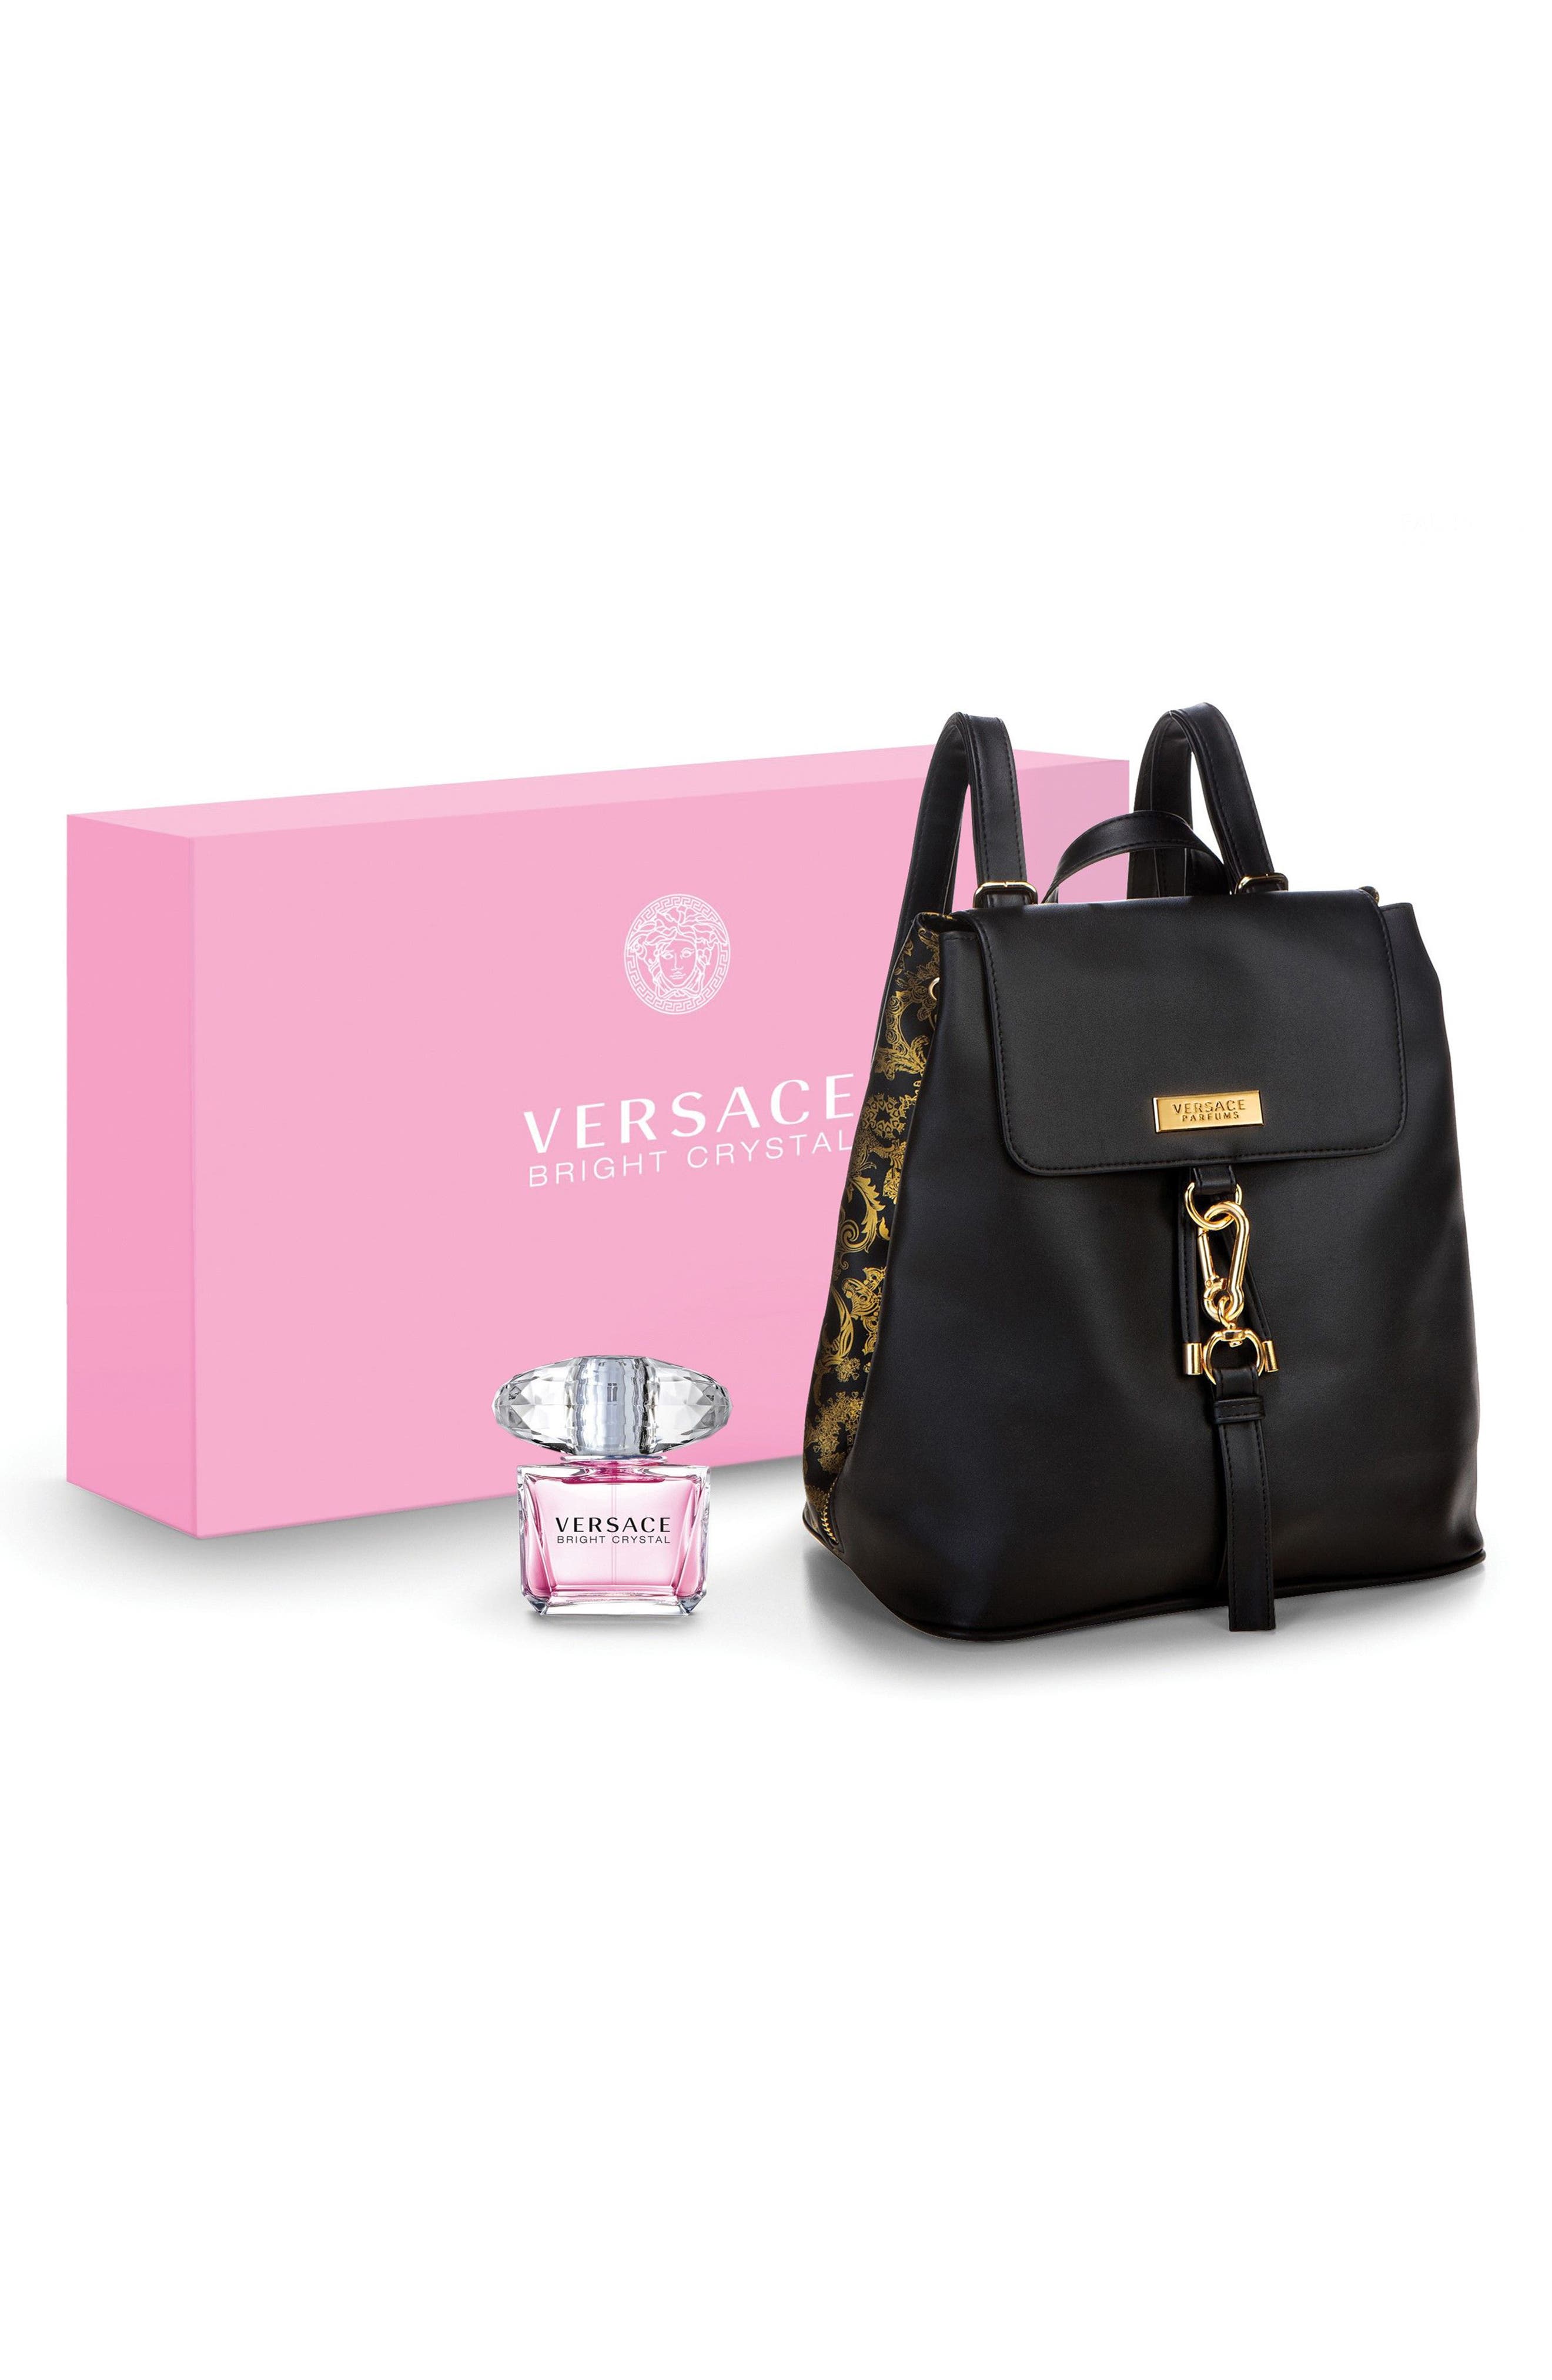 versace cologne gift set with bag